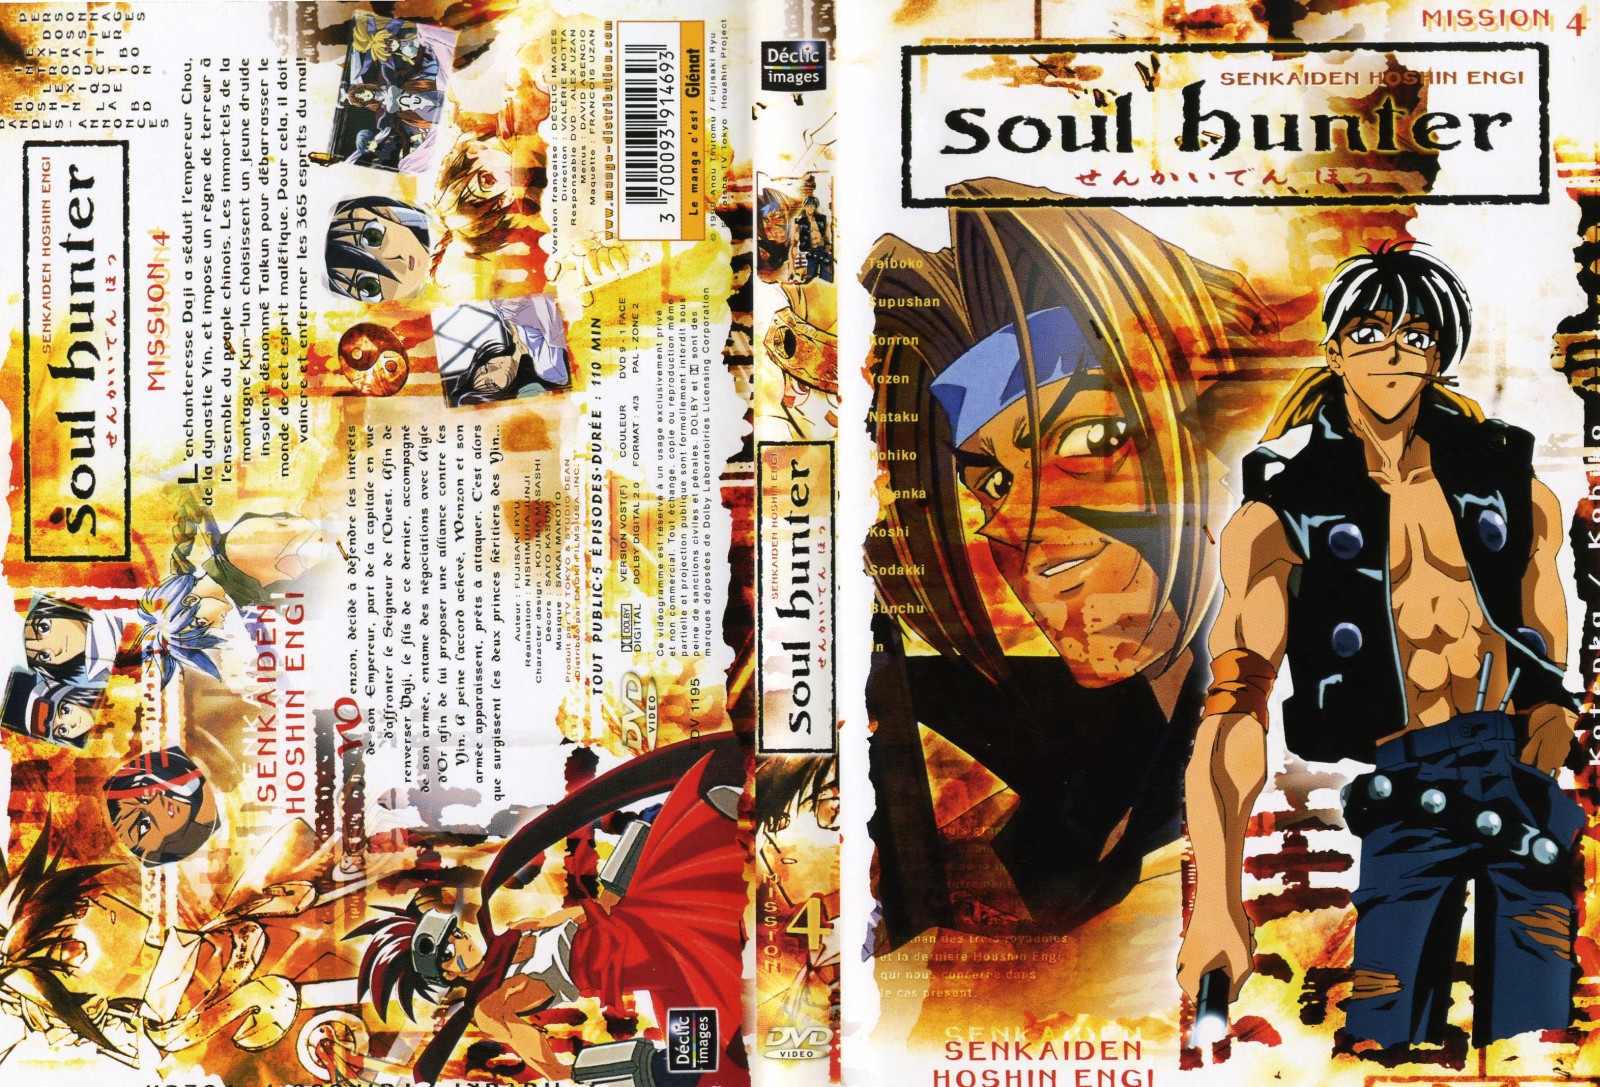 Jaquette DVD Soul hunter vol 4